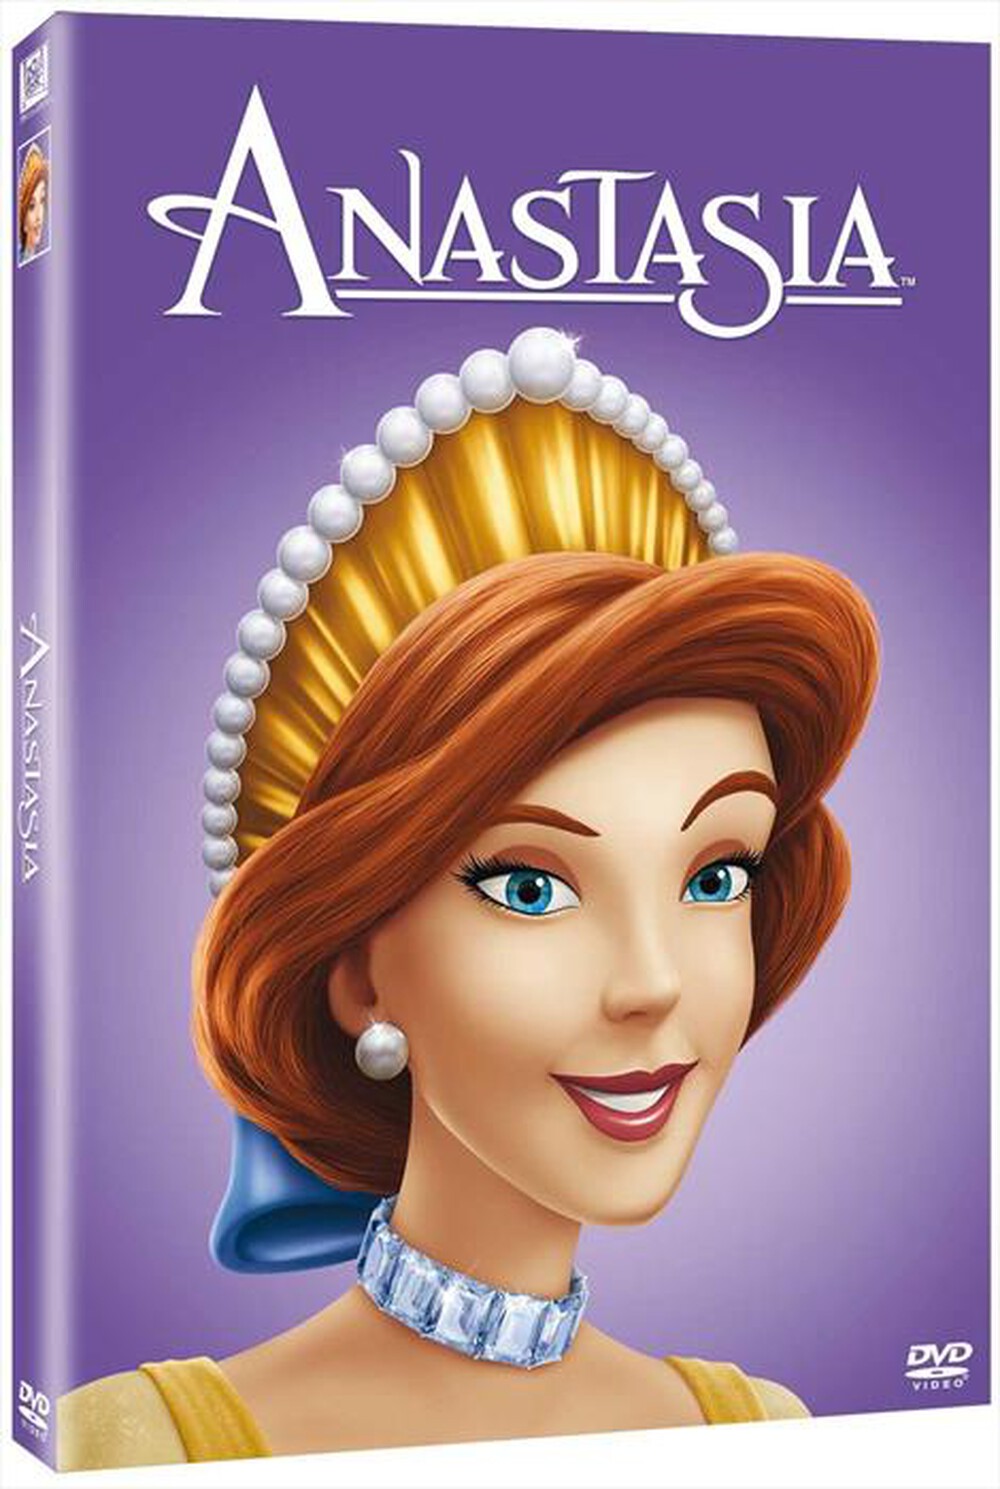 "WALT DISNEY - Anastasia (Funtastic Edition)"